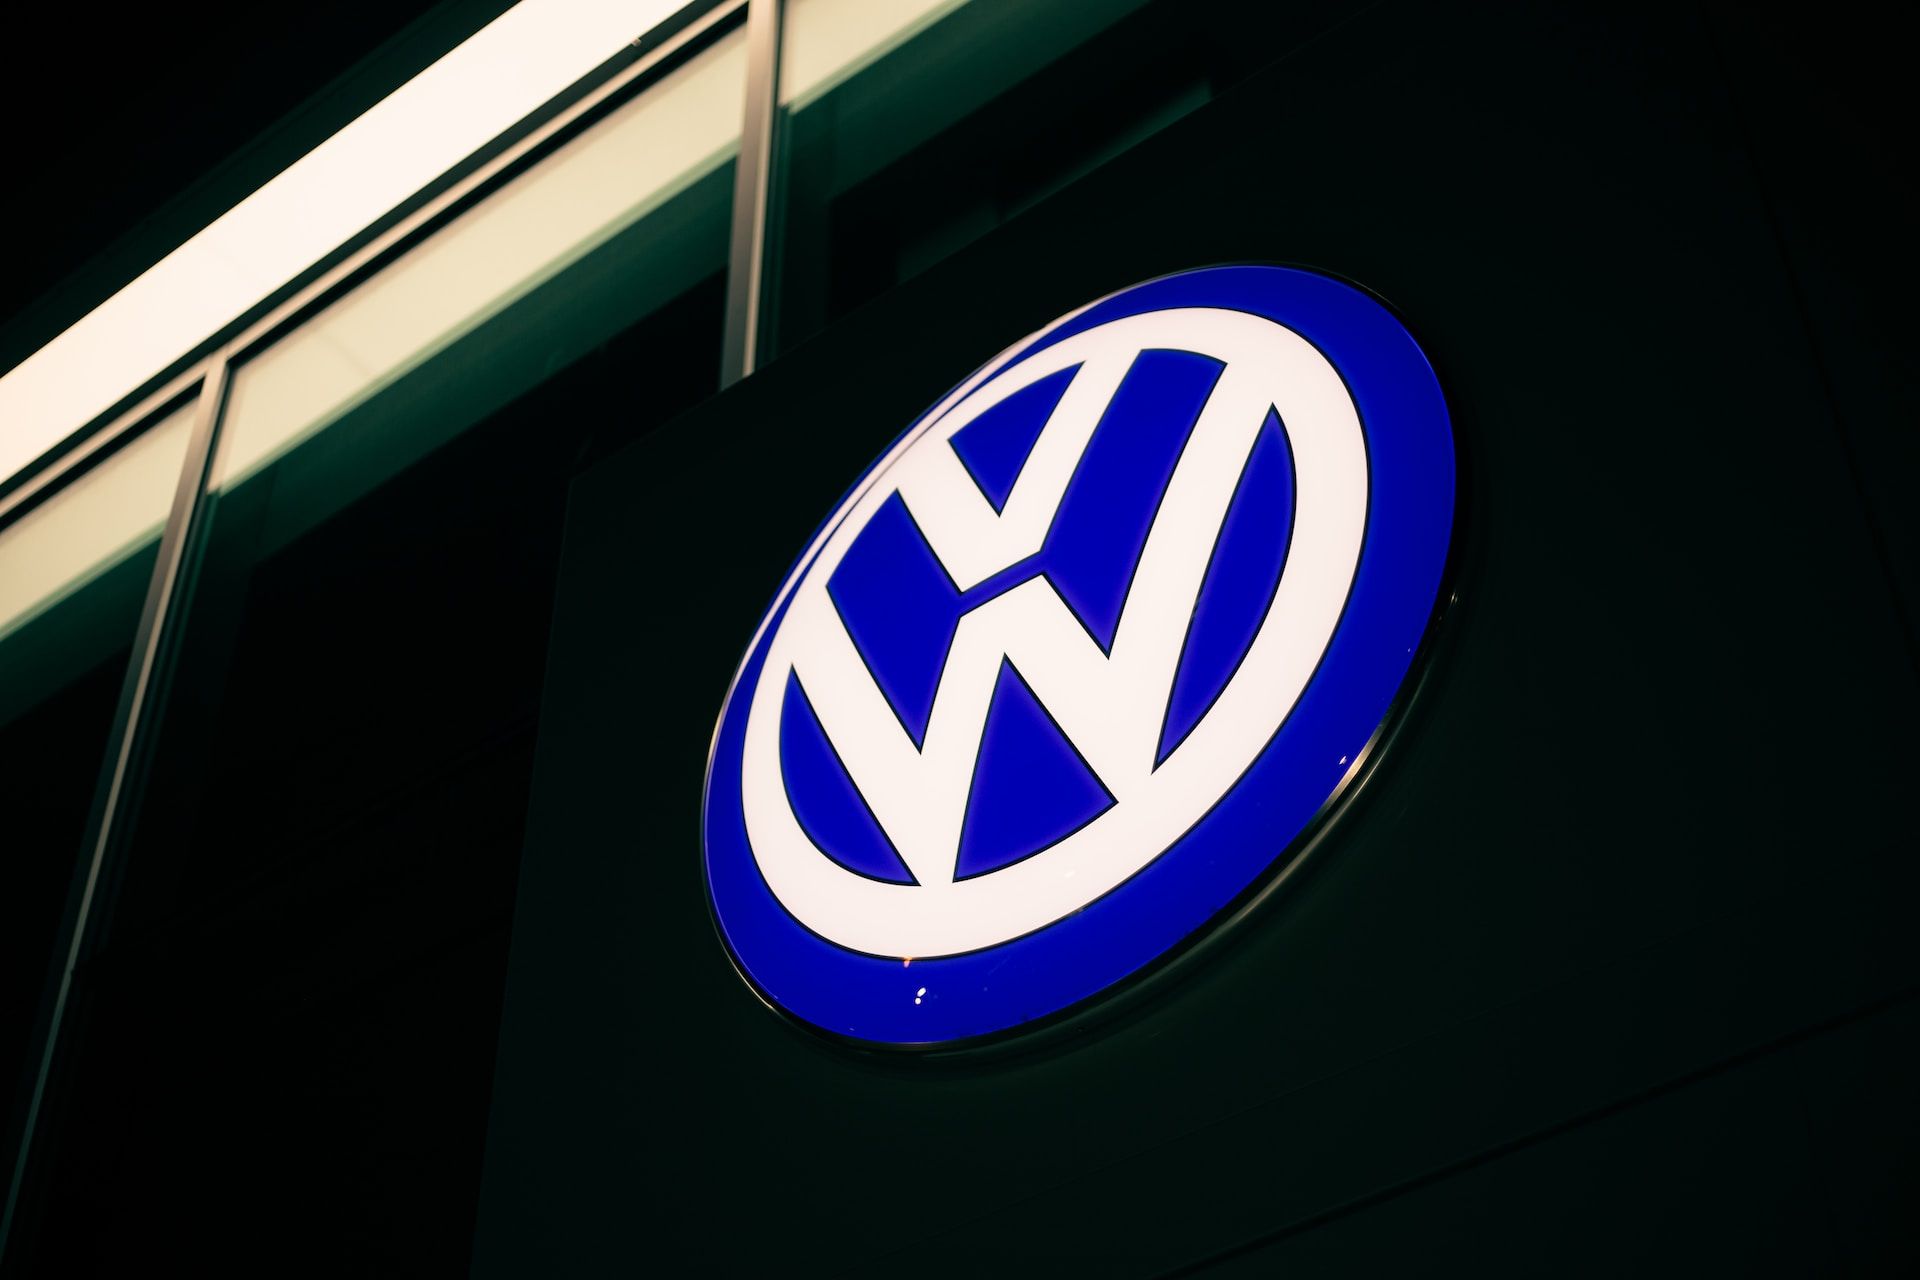 Perusahaan produsen mobil asal Jerman, Volkswagen